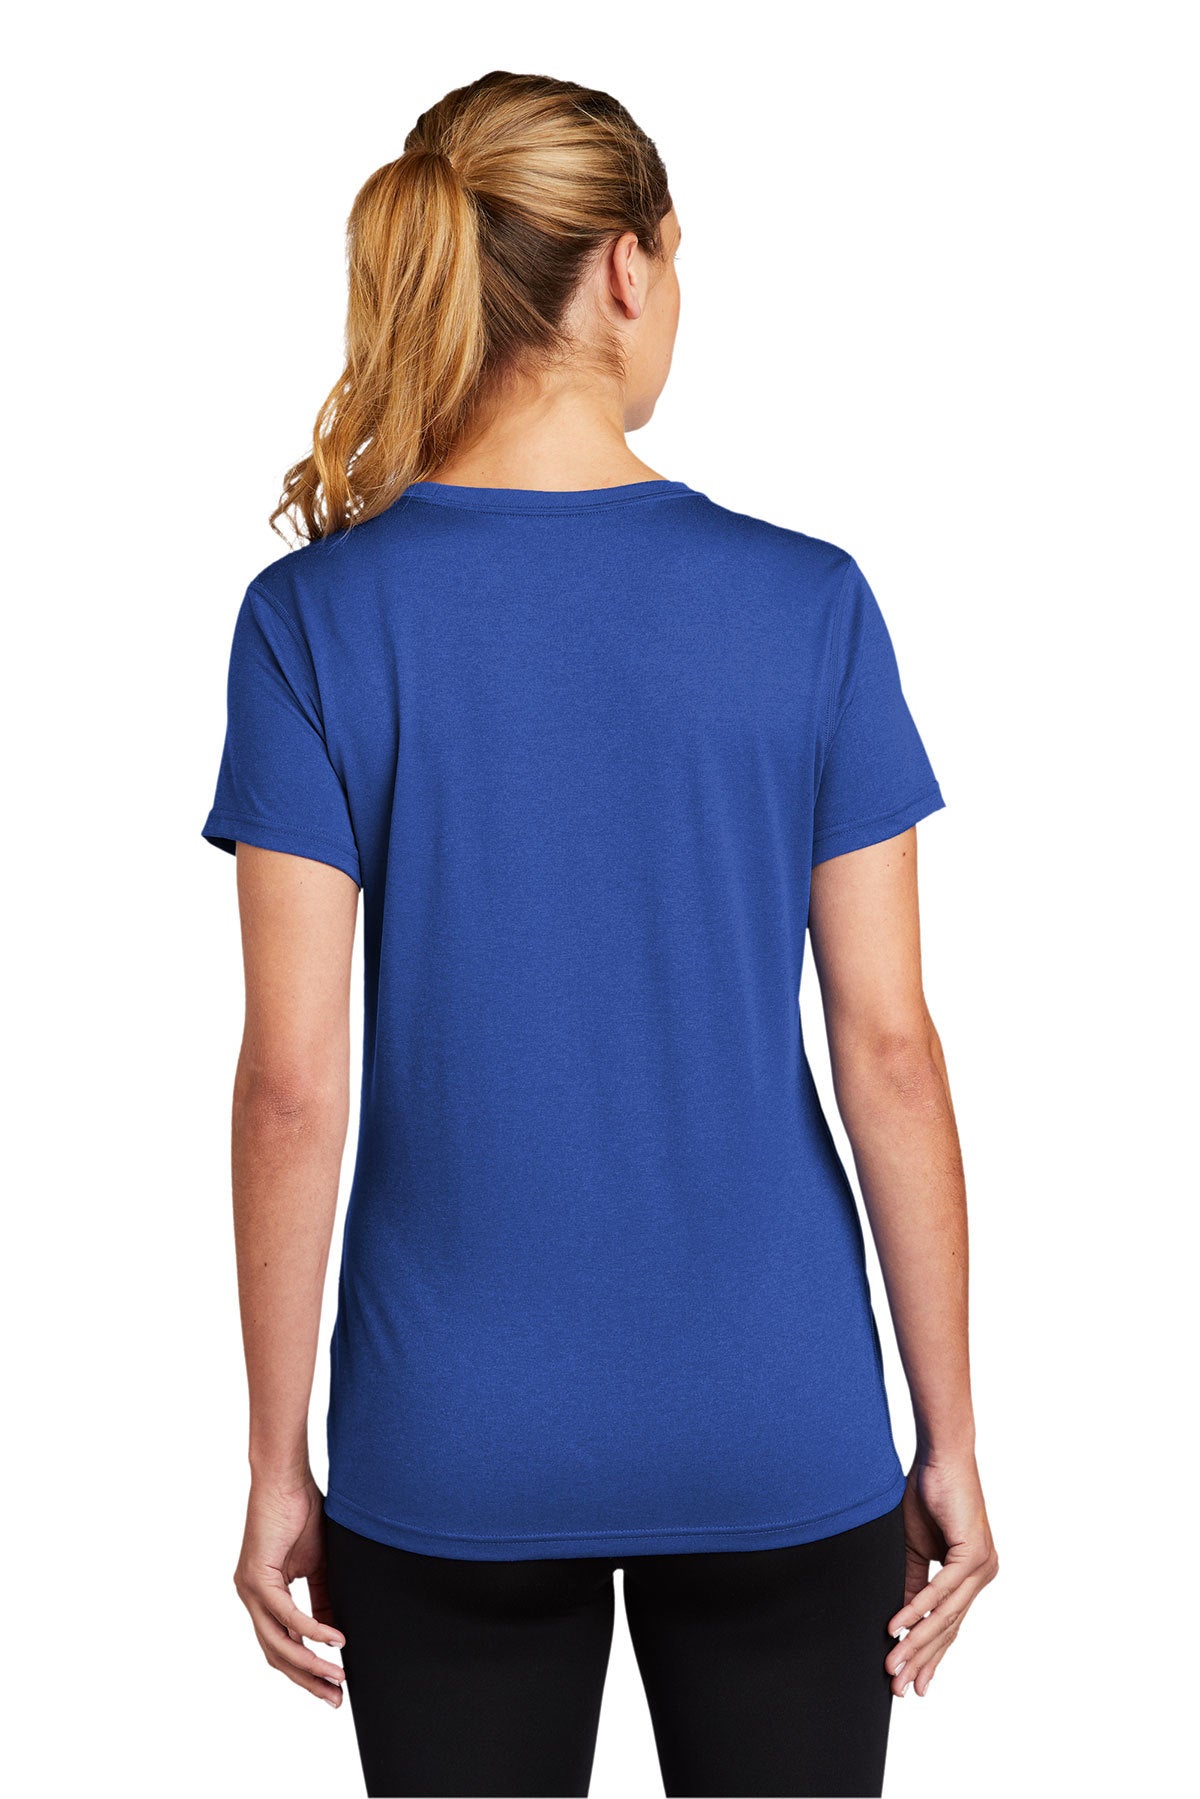 Nike Ladies Legend Customized T-Shirts, Game Royal